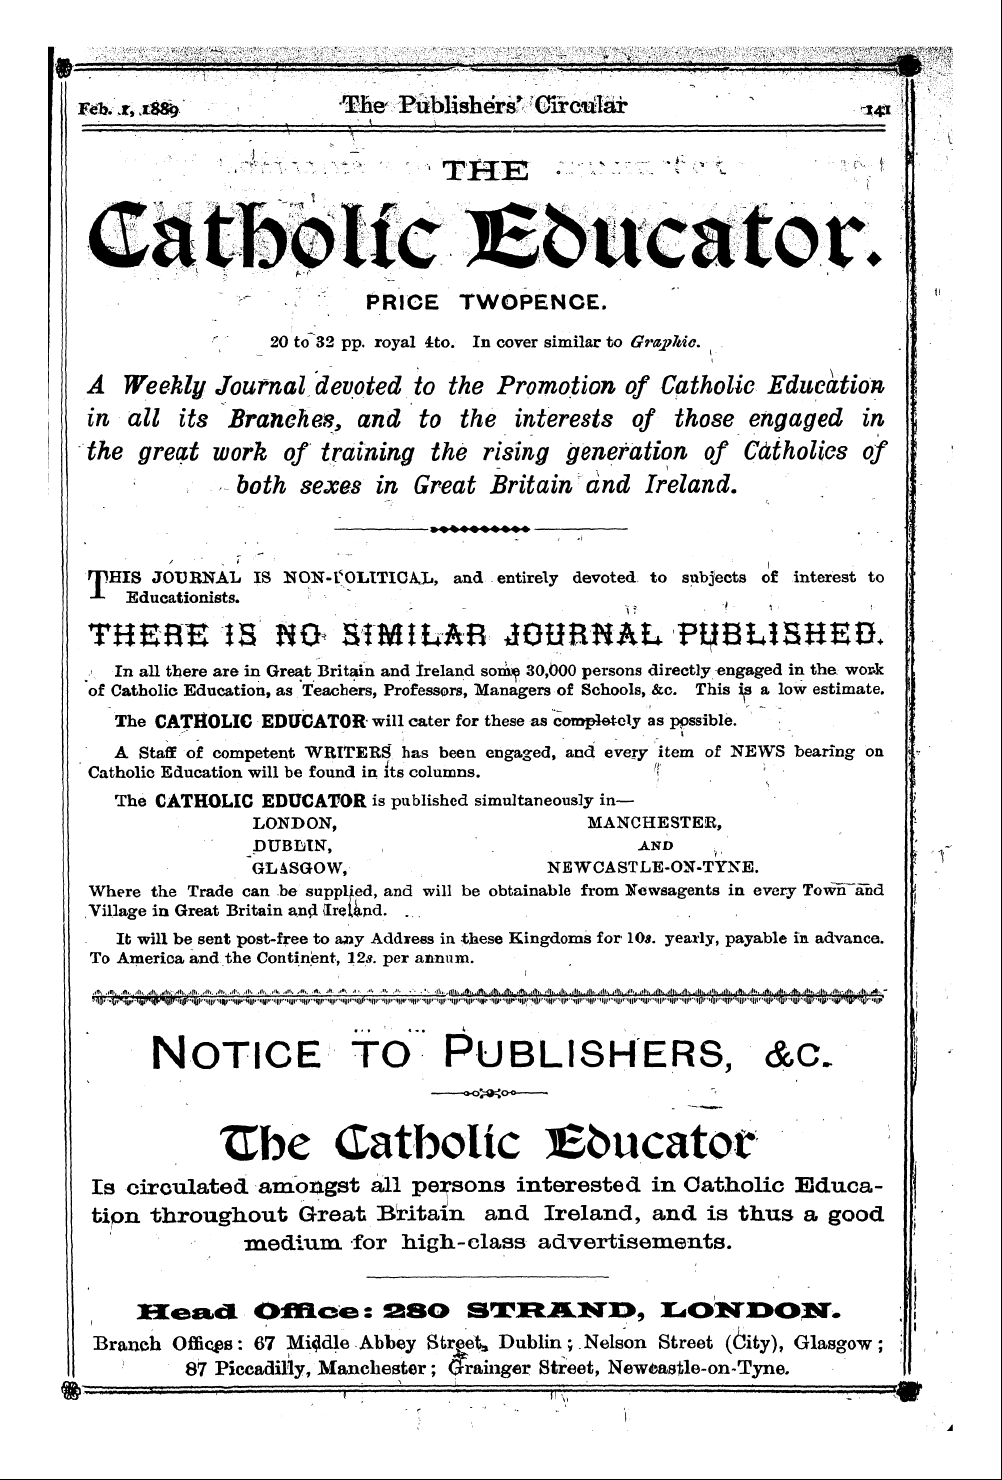 Publishers’ Circular (1880-1890): jS F Y, 1st edition: 39